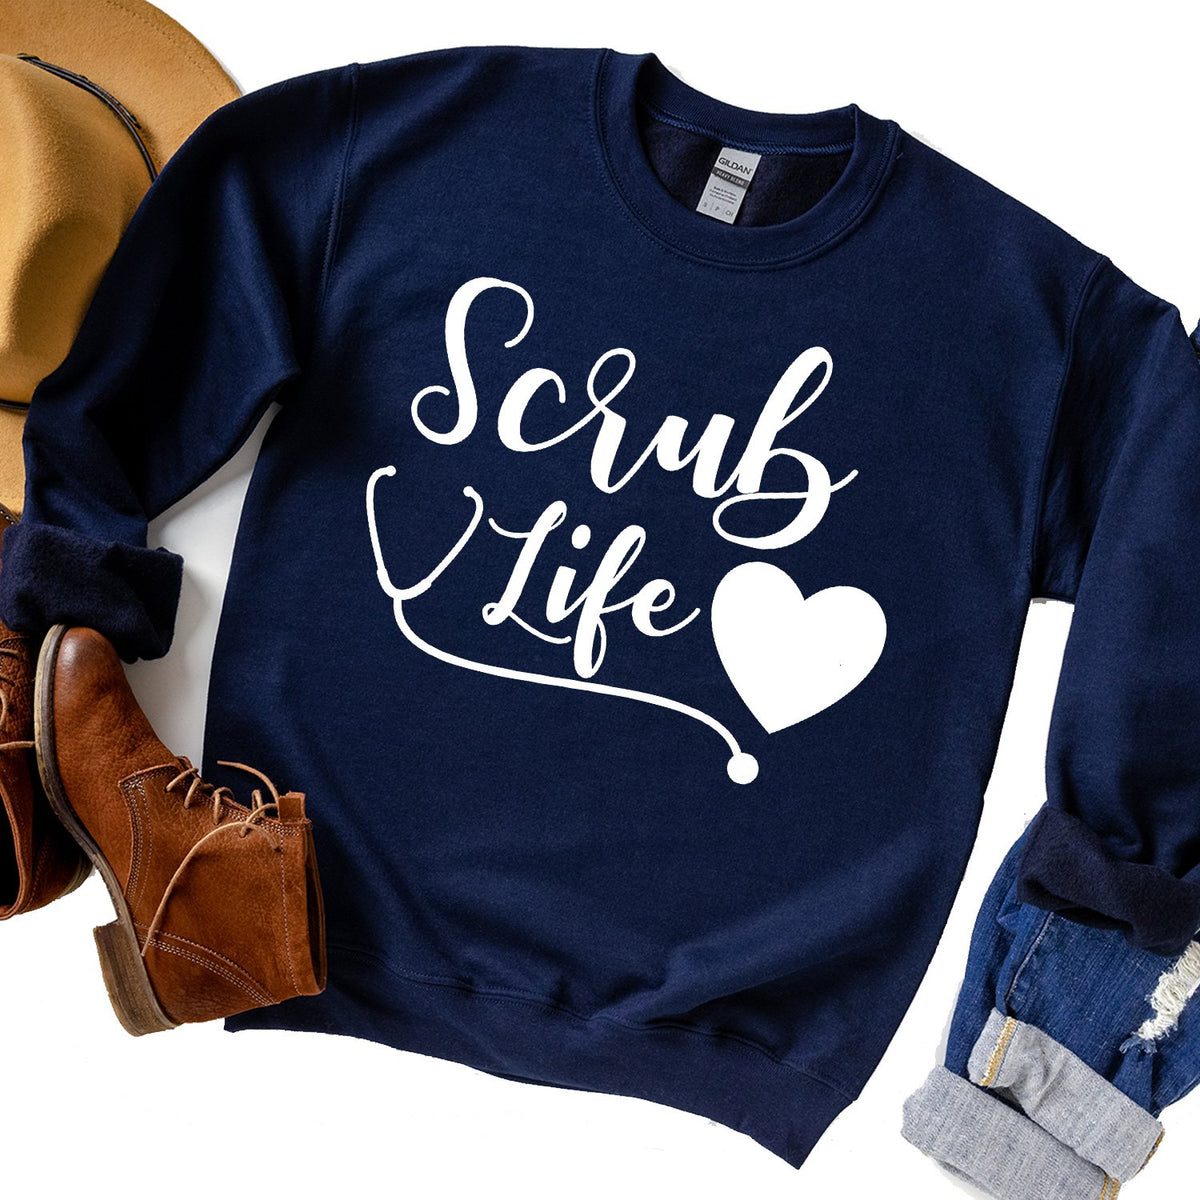 Scrub Life with Stethoscope and Heart - Long Sleeve Heavy Crewneck Sweatshirt